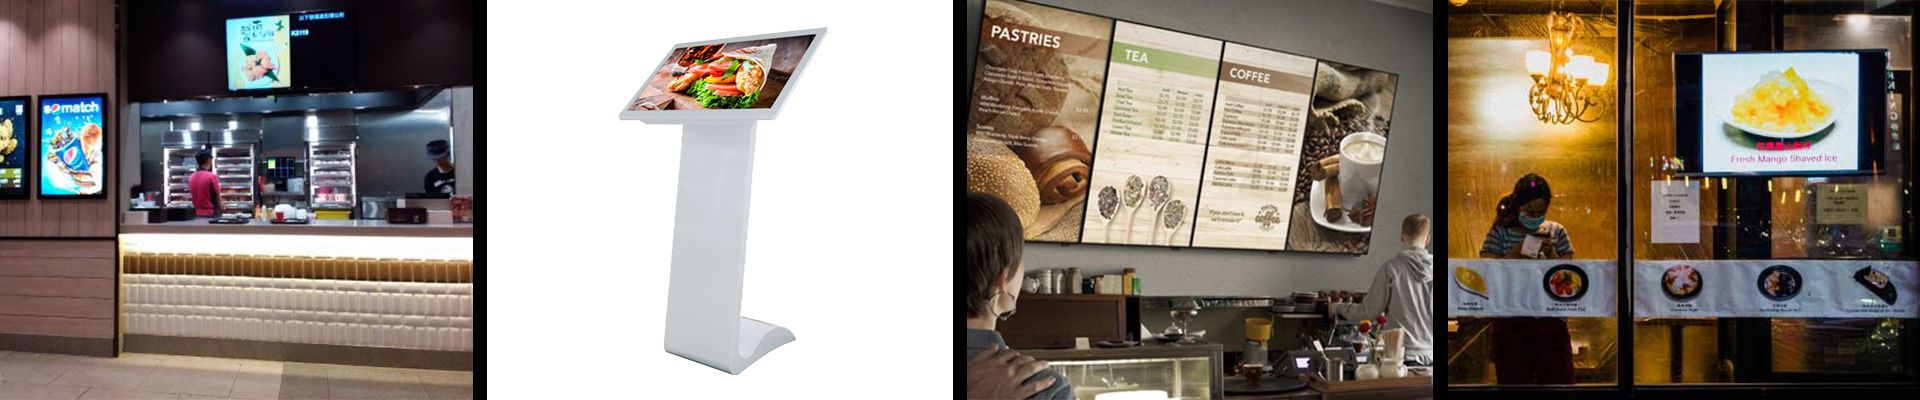 Restaurant digital menu display - Inelmatic